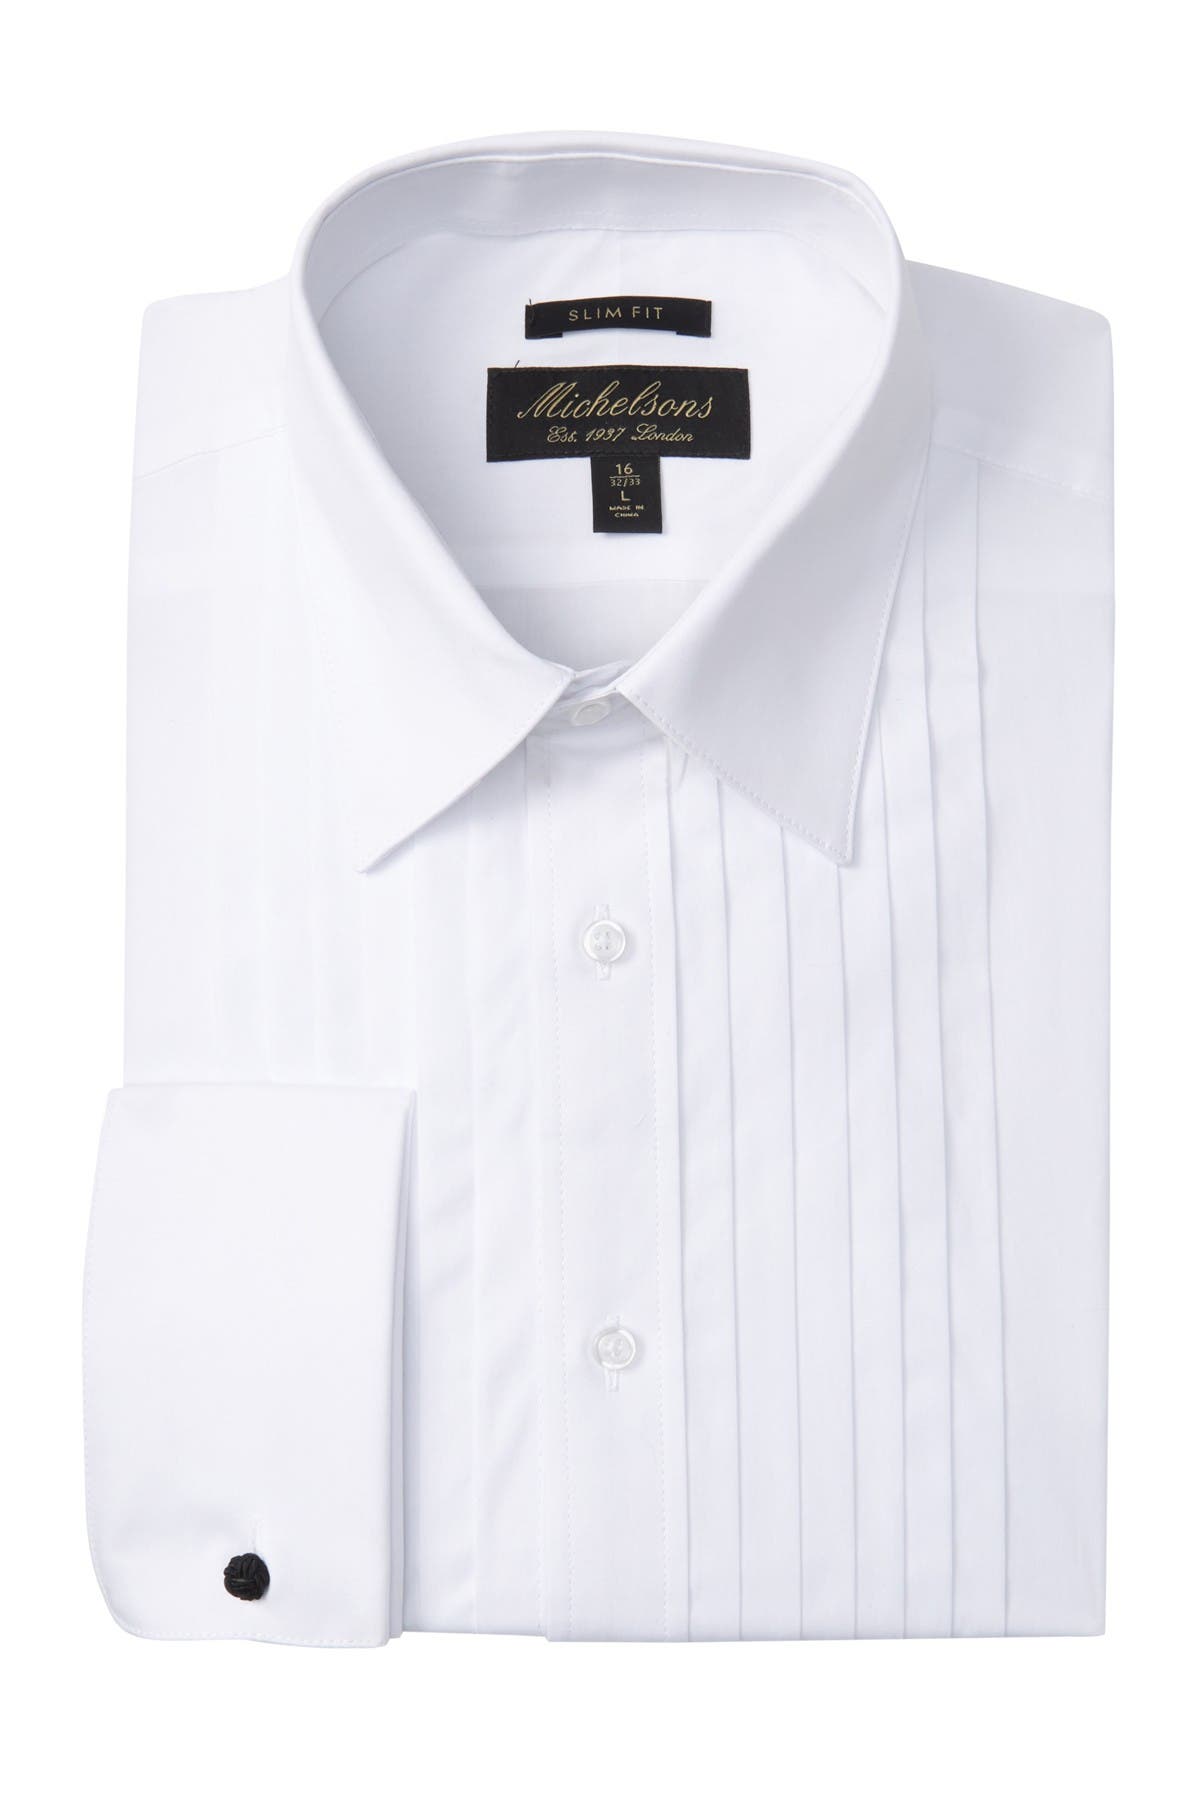 $276 Michelsons Men Slim-Fit Black White Long-Sleeve Button Check Dress Shirt M